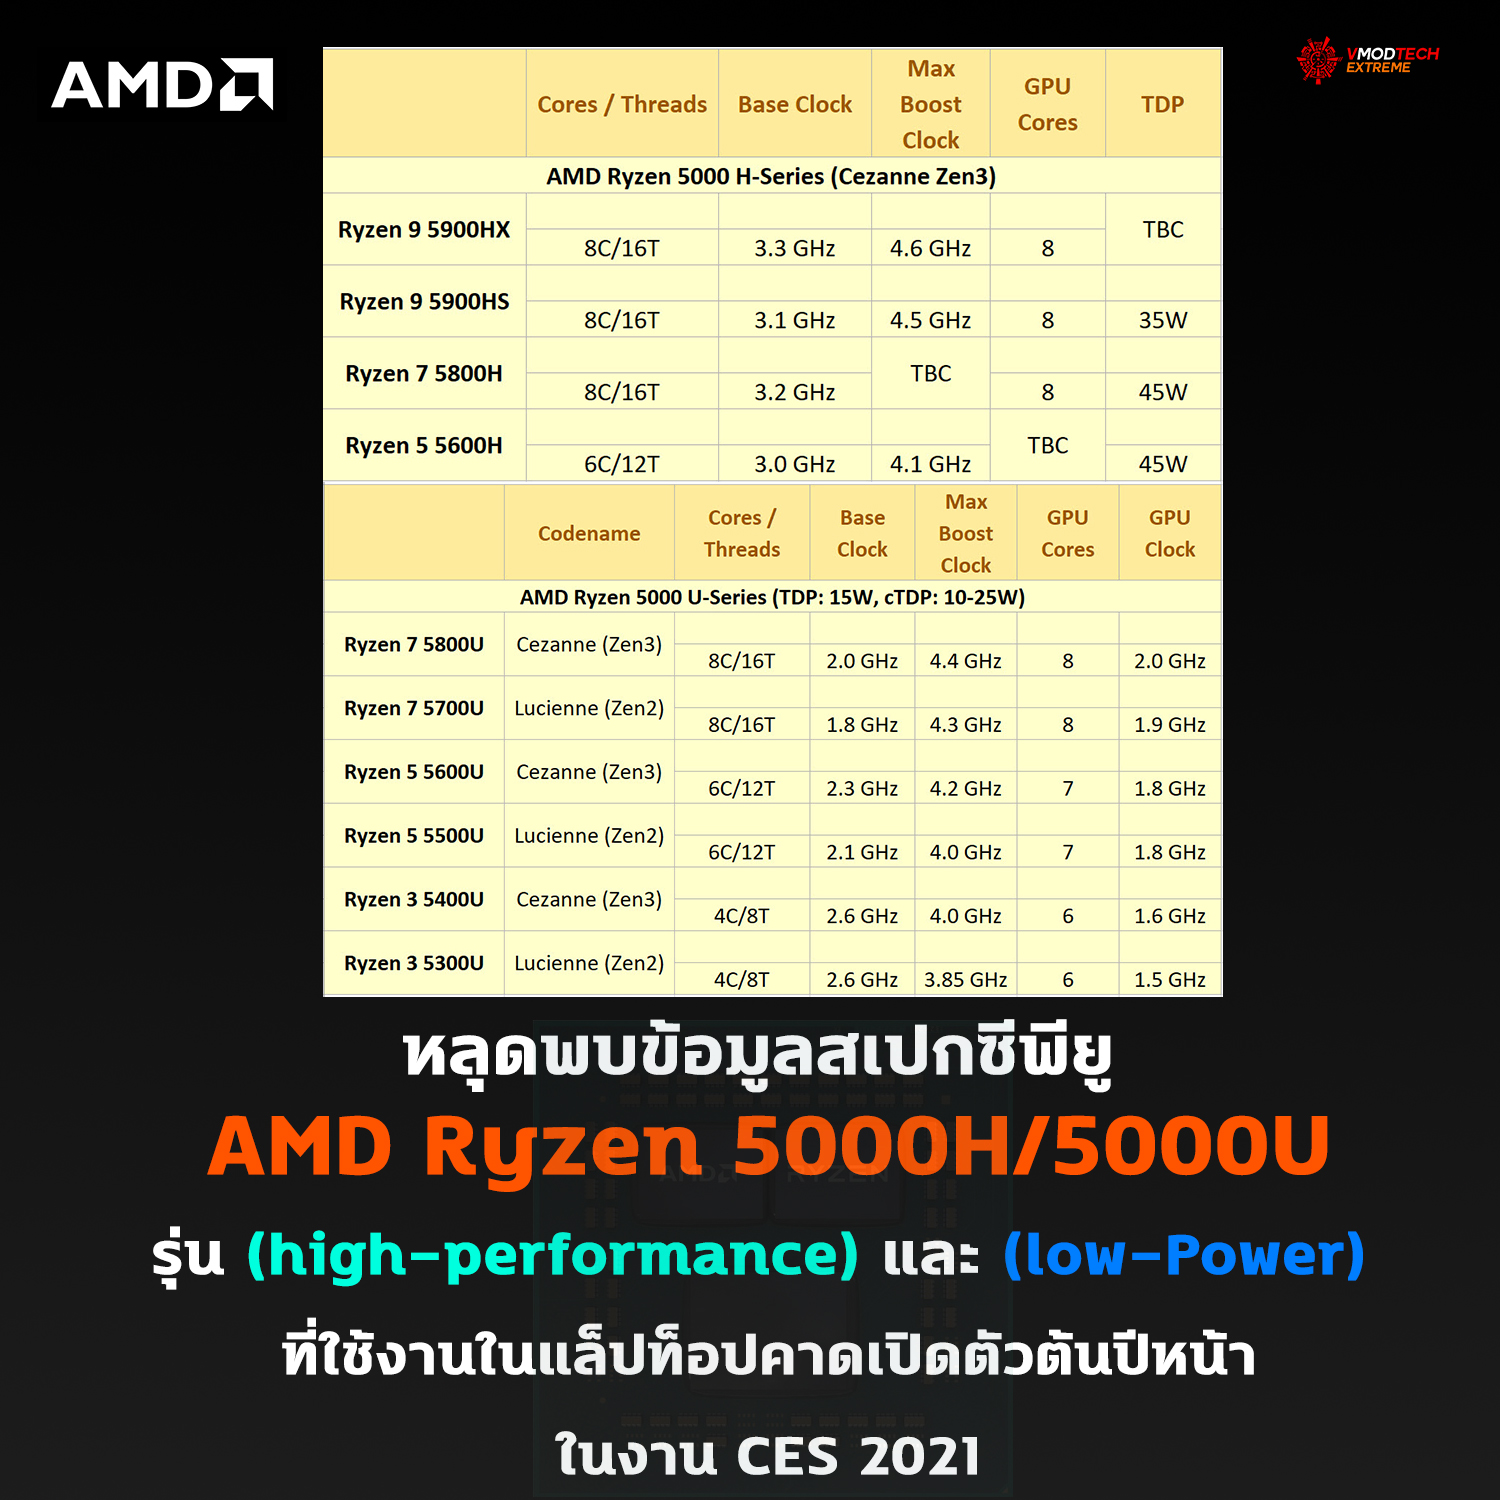 amd ryzen 5000h u ces2021 หลุดพบข้อมูลสเปกซีพียู AMD Ryzen 5000H/5000U ที่ใช้งานในแล็ปท็อปคาดเปิดตัวในงาน CES 2021